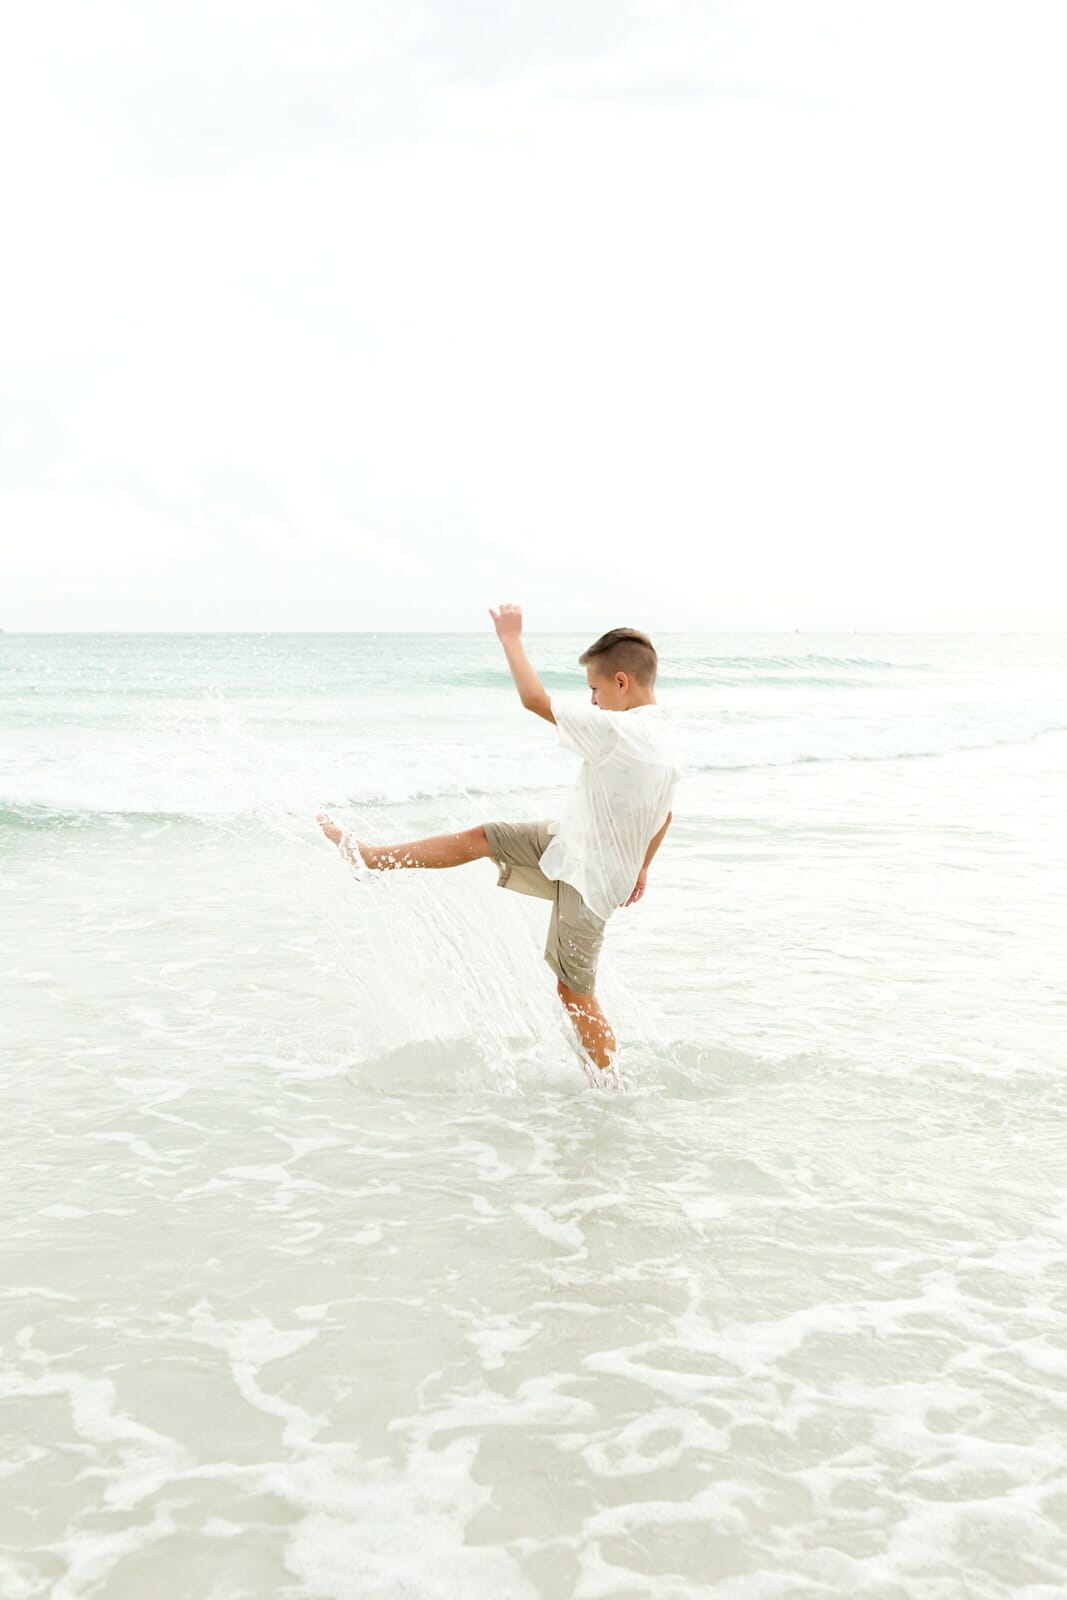 A boy kicking a ball in the ocean Destin Holiday Isle.